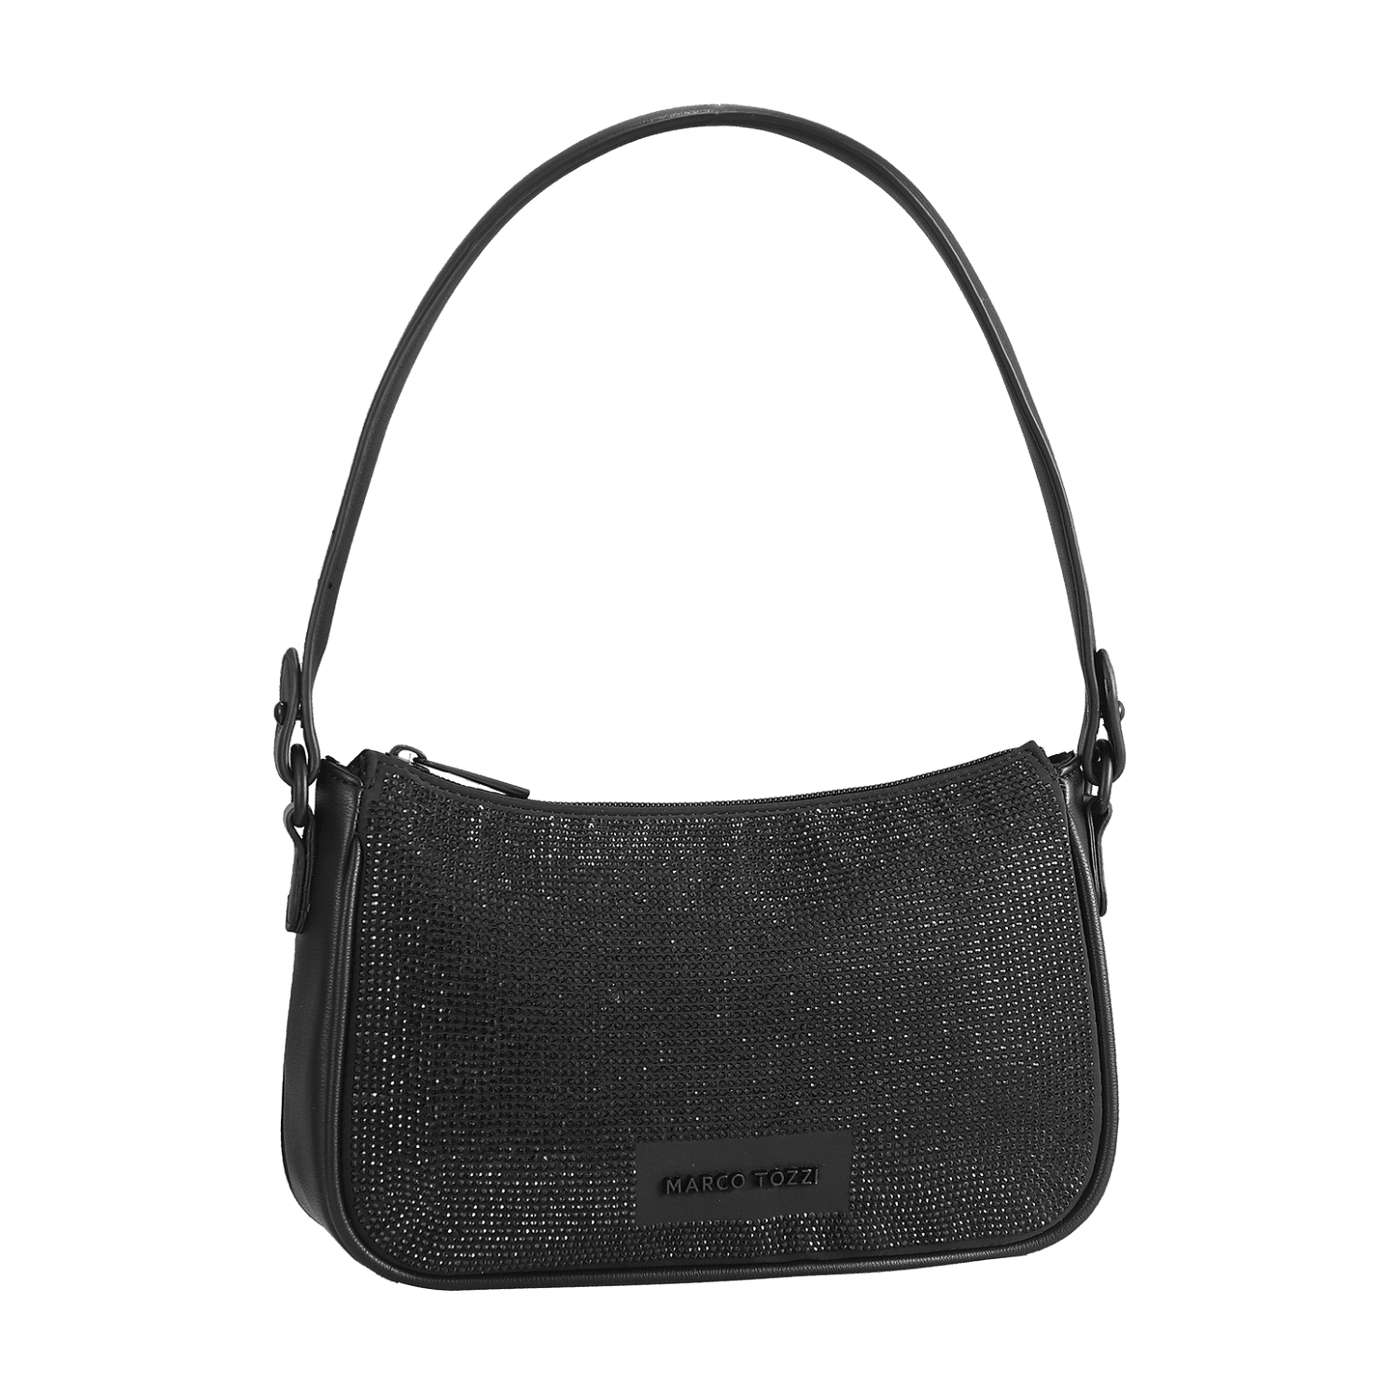 Marco Tozzi women's glitter black bag